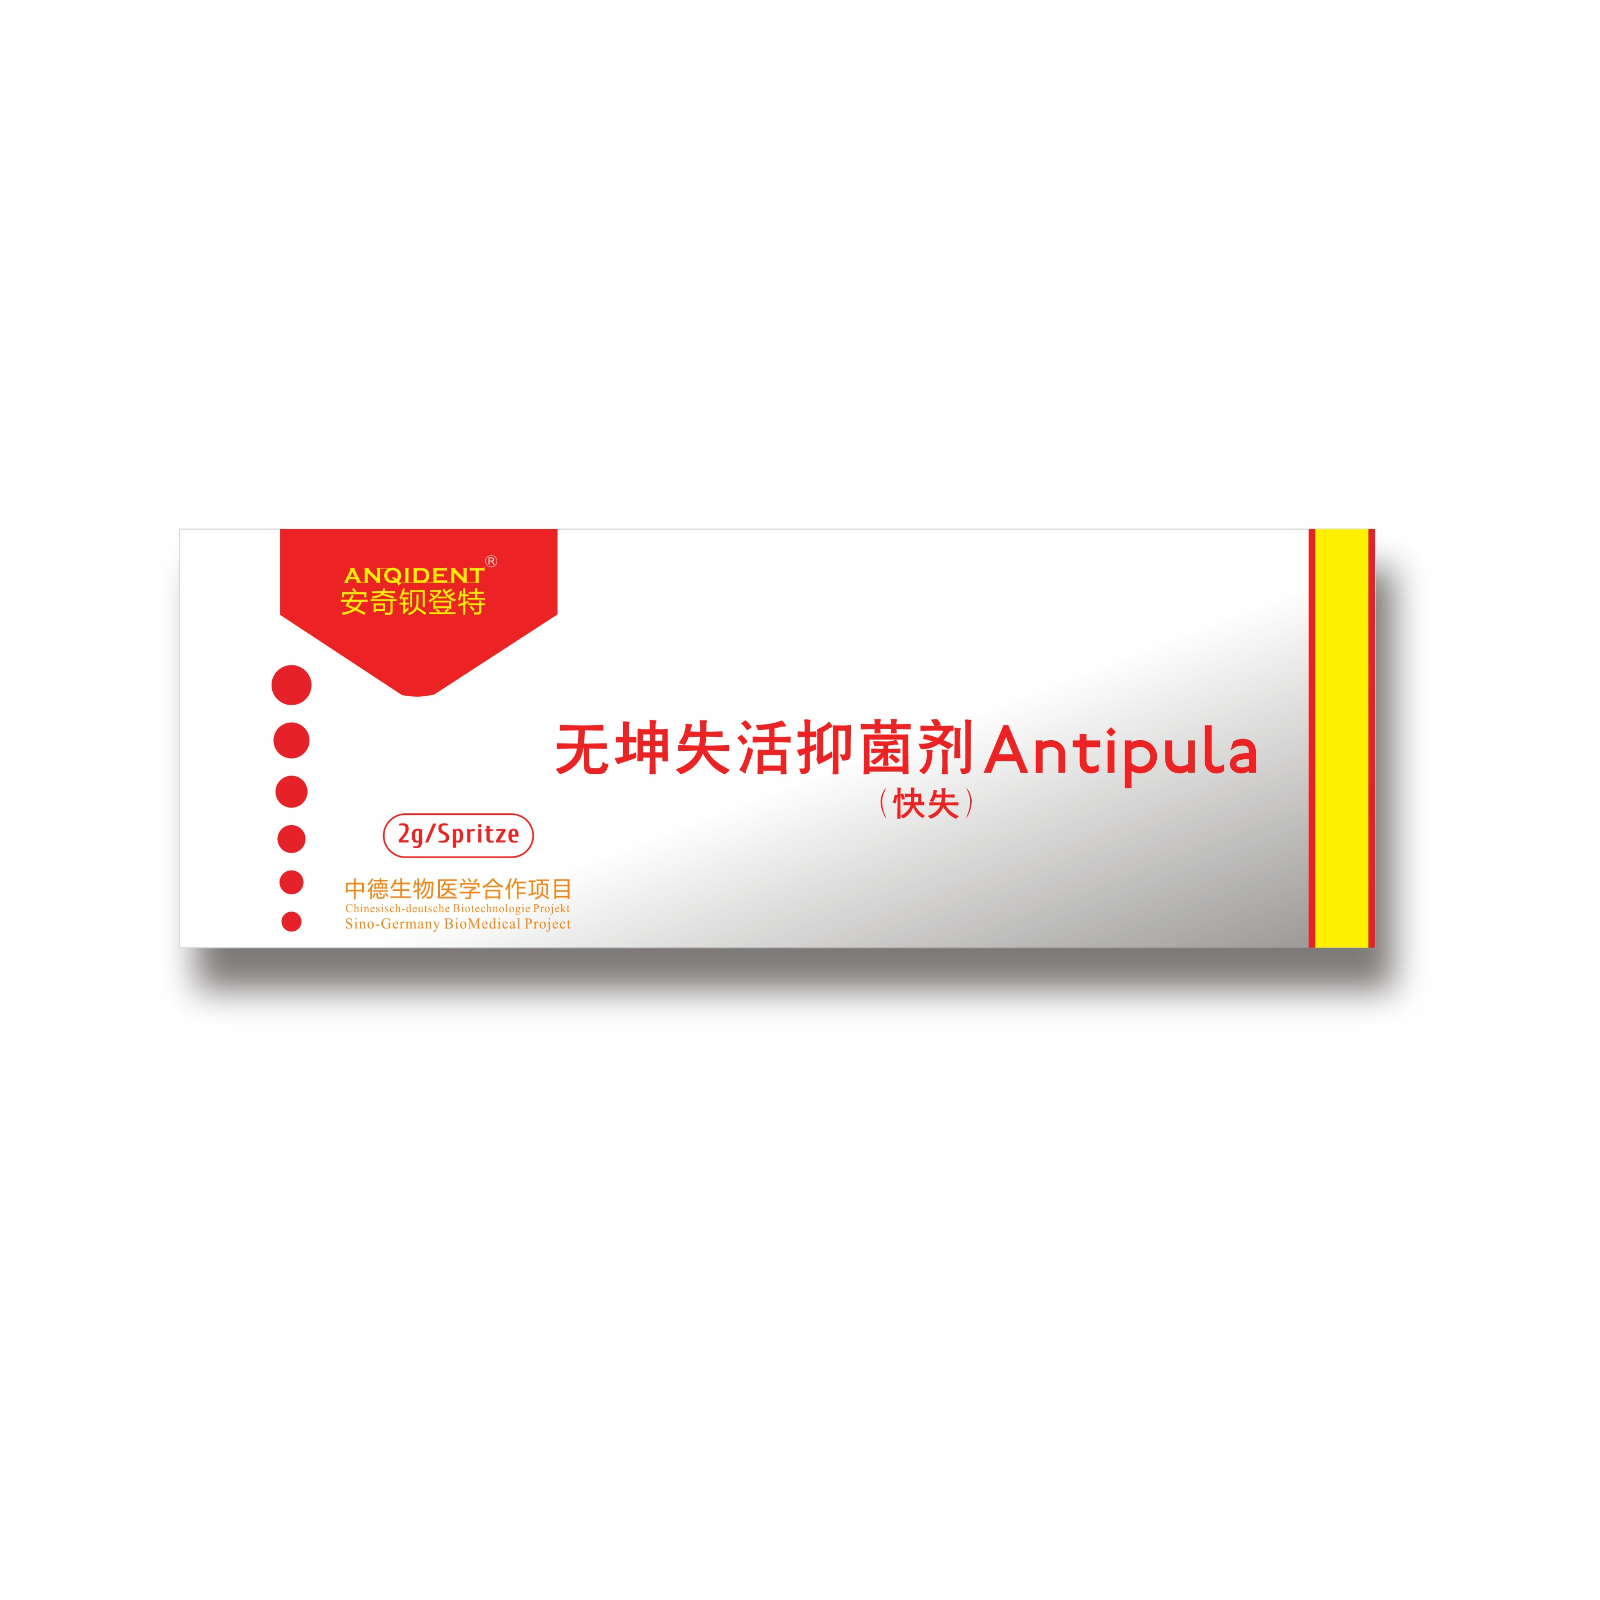 安奇钡登特/AnQiDent Antipulp无砷失活剂(快失) 黄色 1g/支